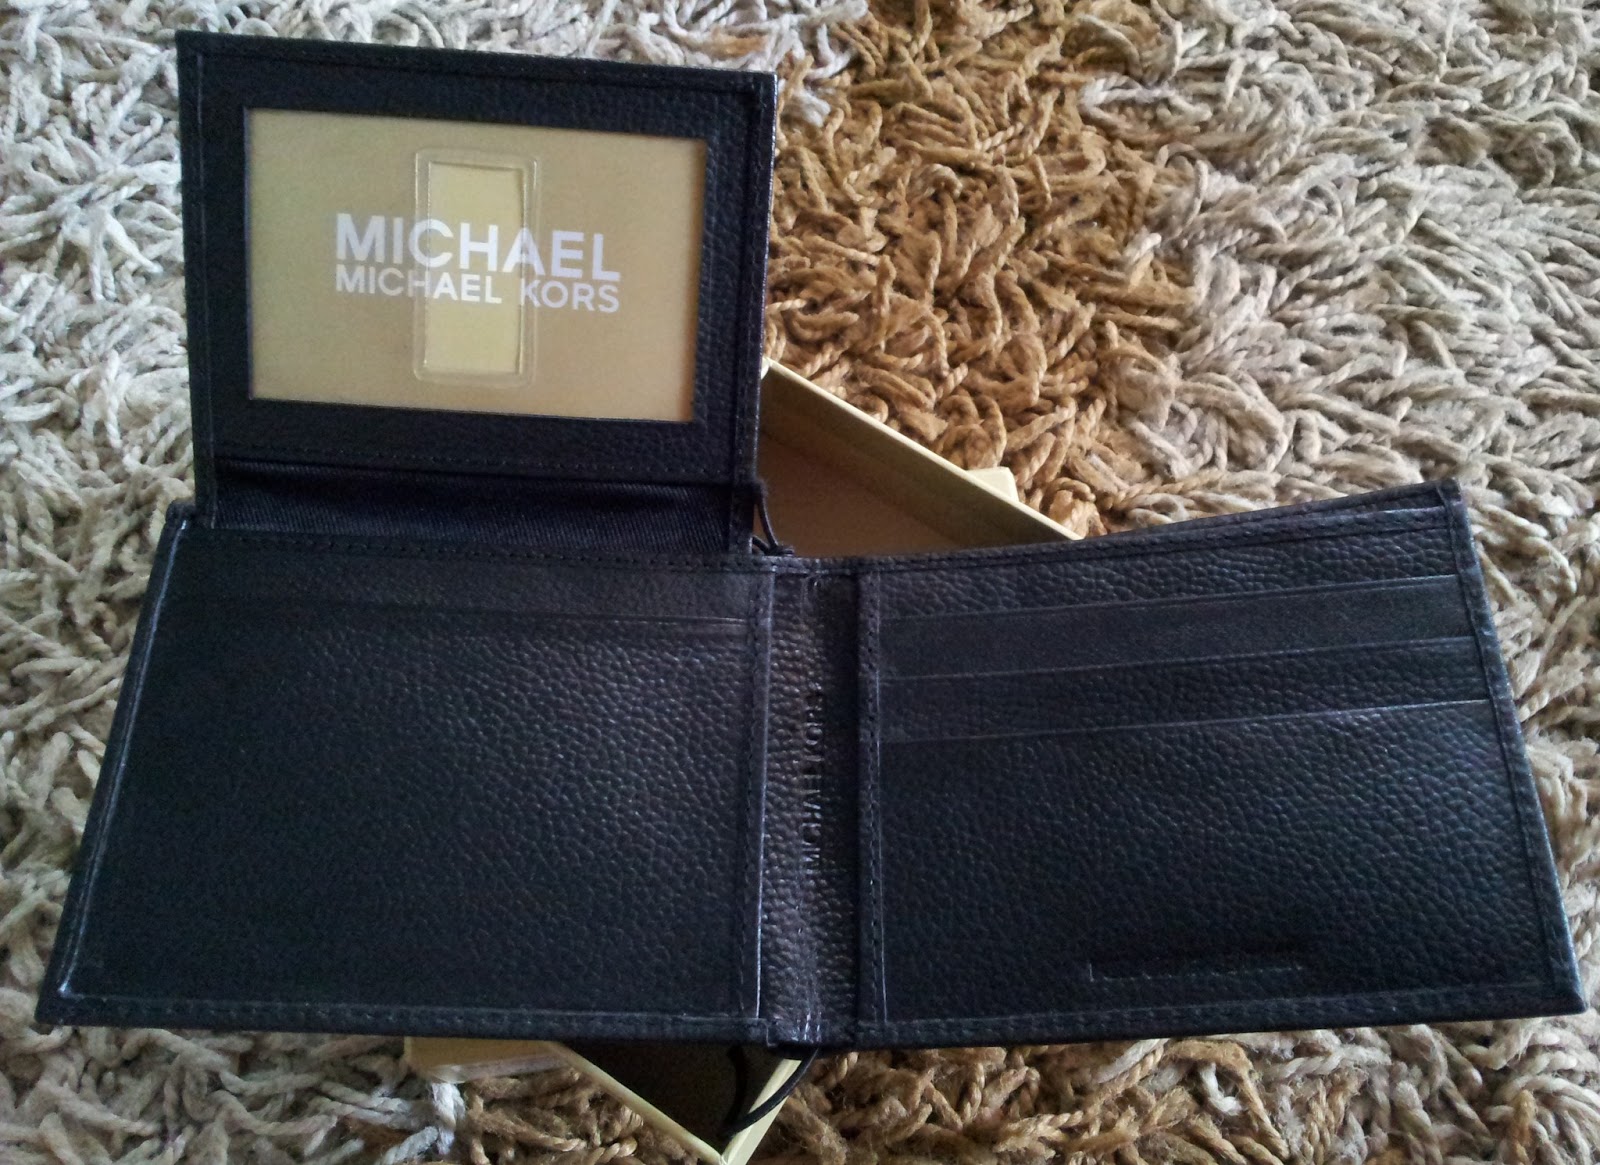 PrettyTreasure2u: Michael Kors Mens Leather Passcase Wallet Black